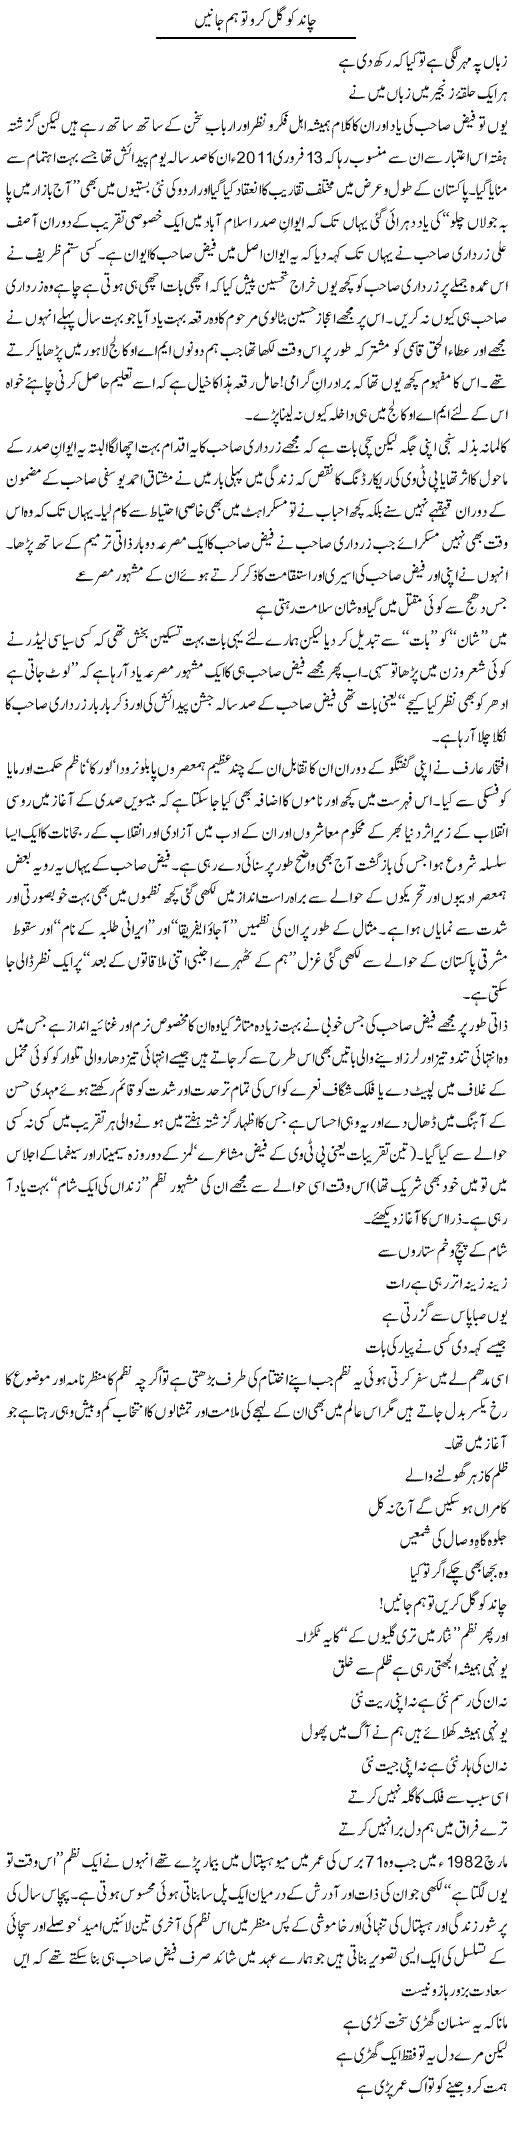 Faiz Sahab Express Column Amjad Islam 20 February 2011